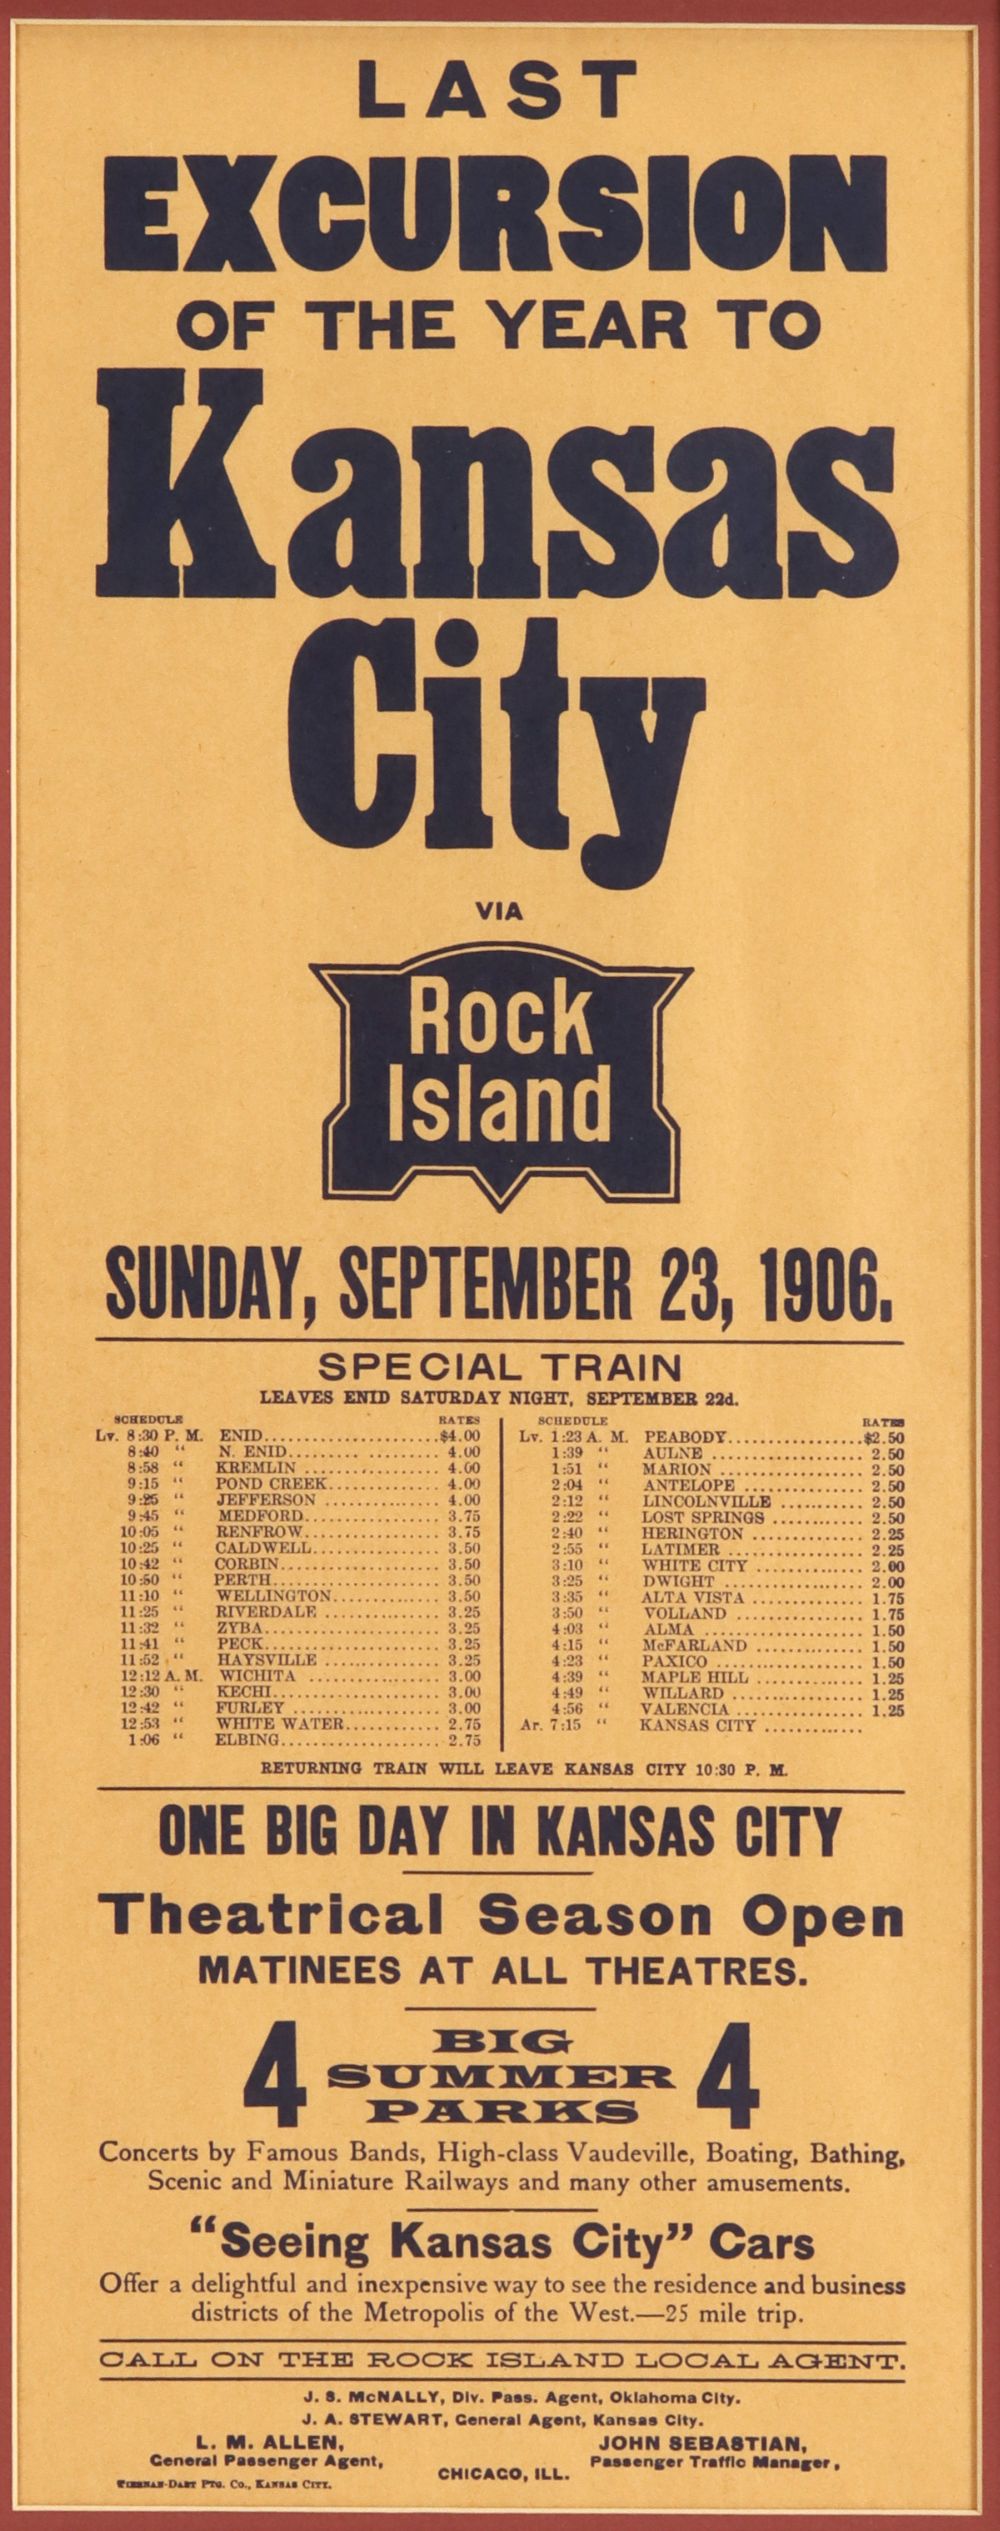 A ROCK ISLAND RAILROAD ADVERTISING BROADSIDE DATED 1906